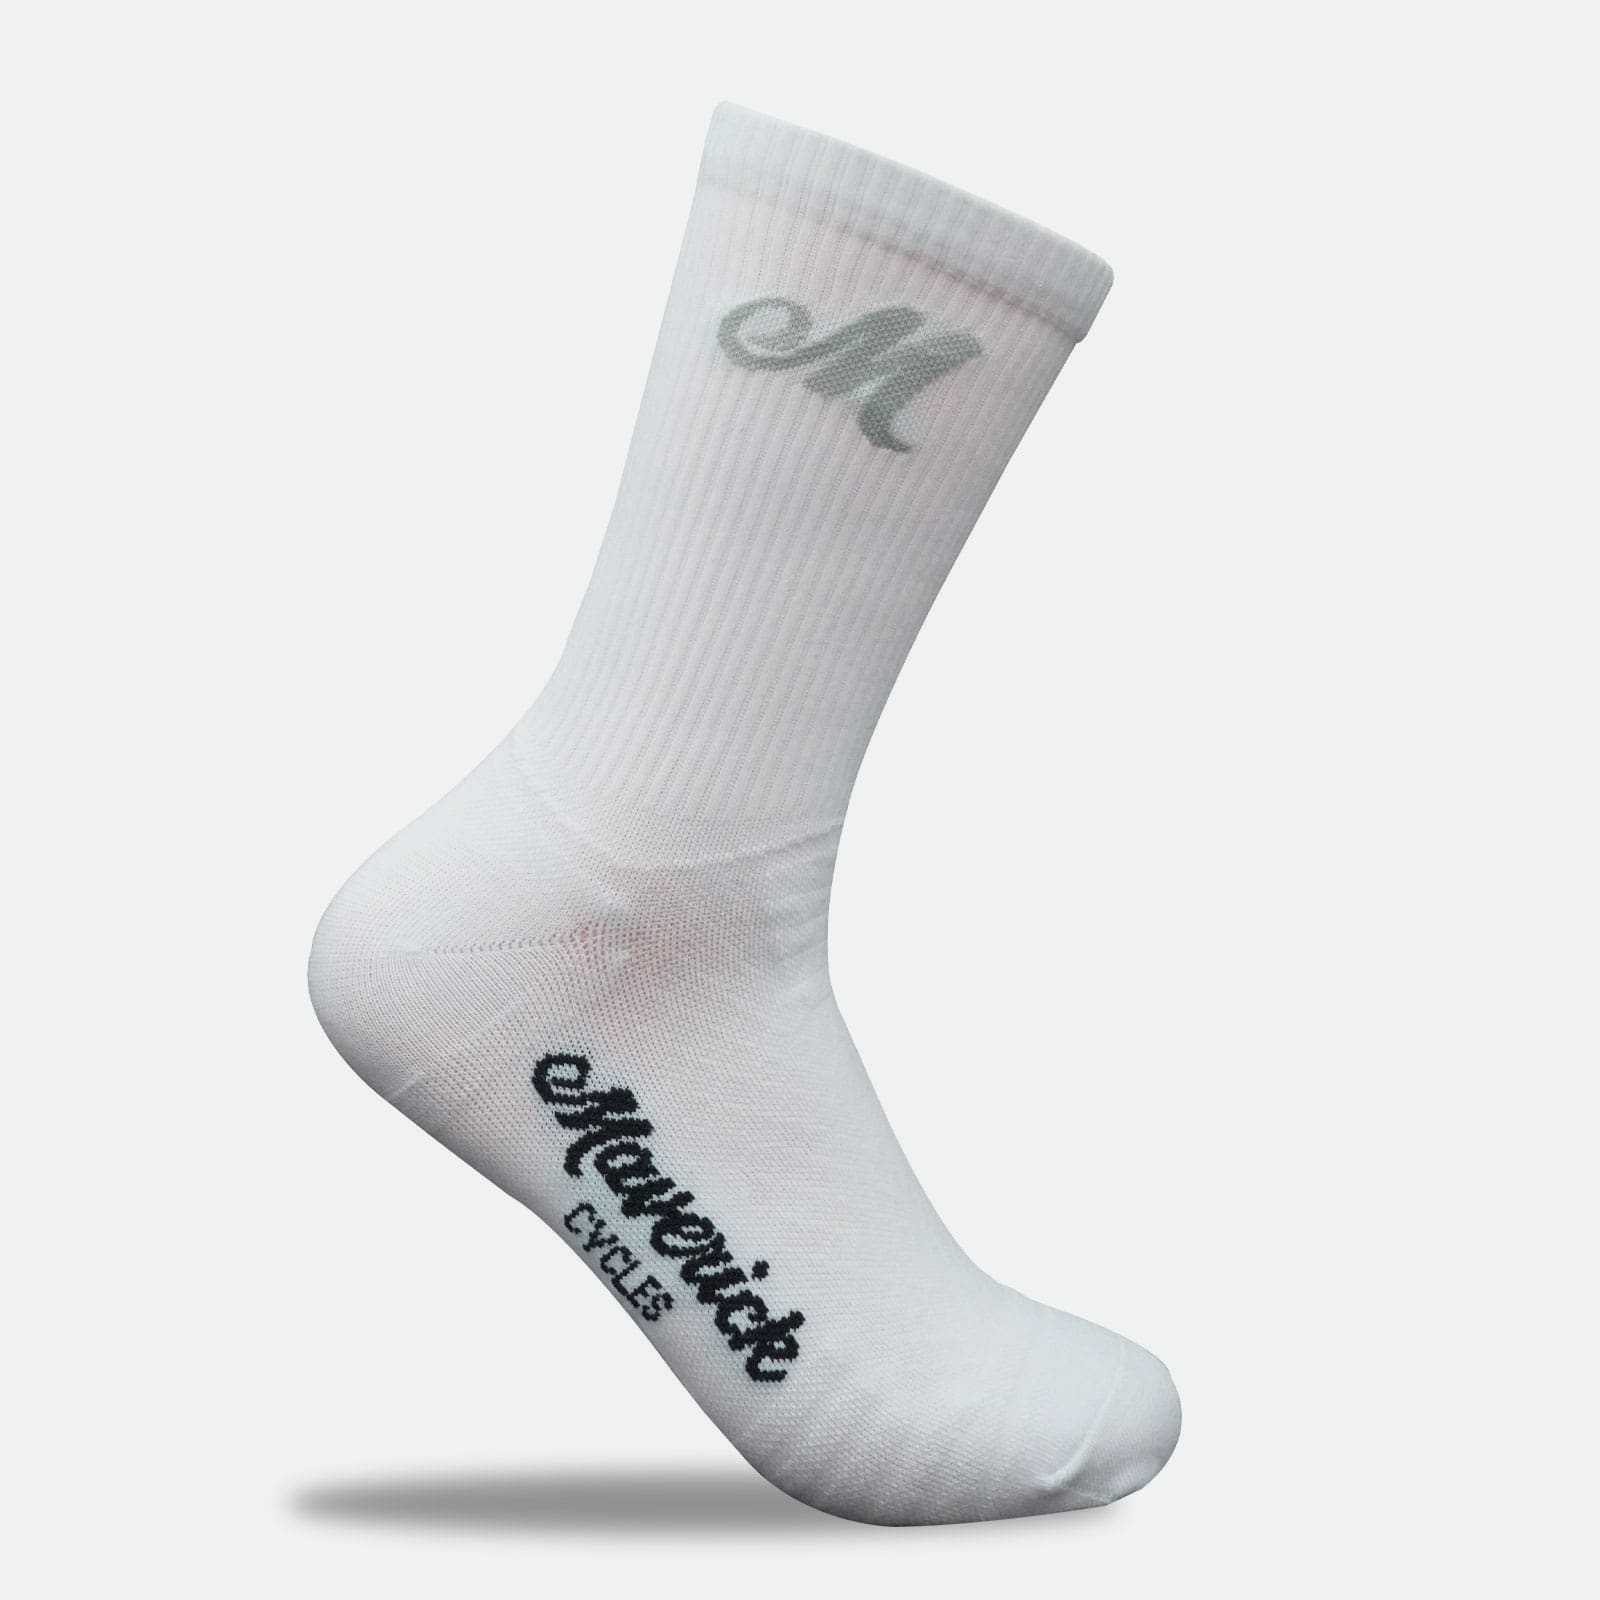 The PRO Socks White